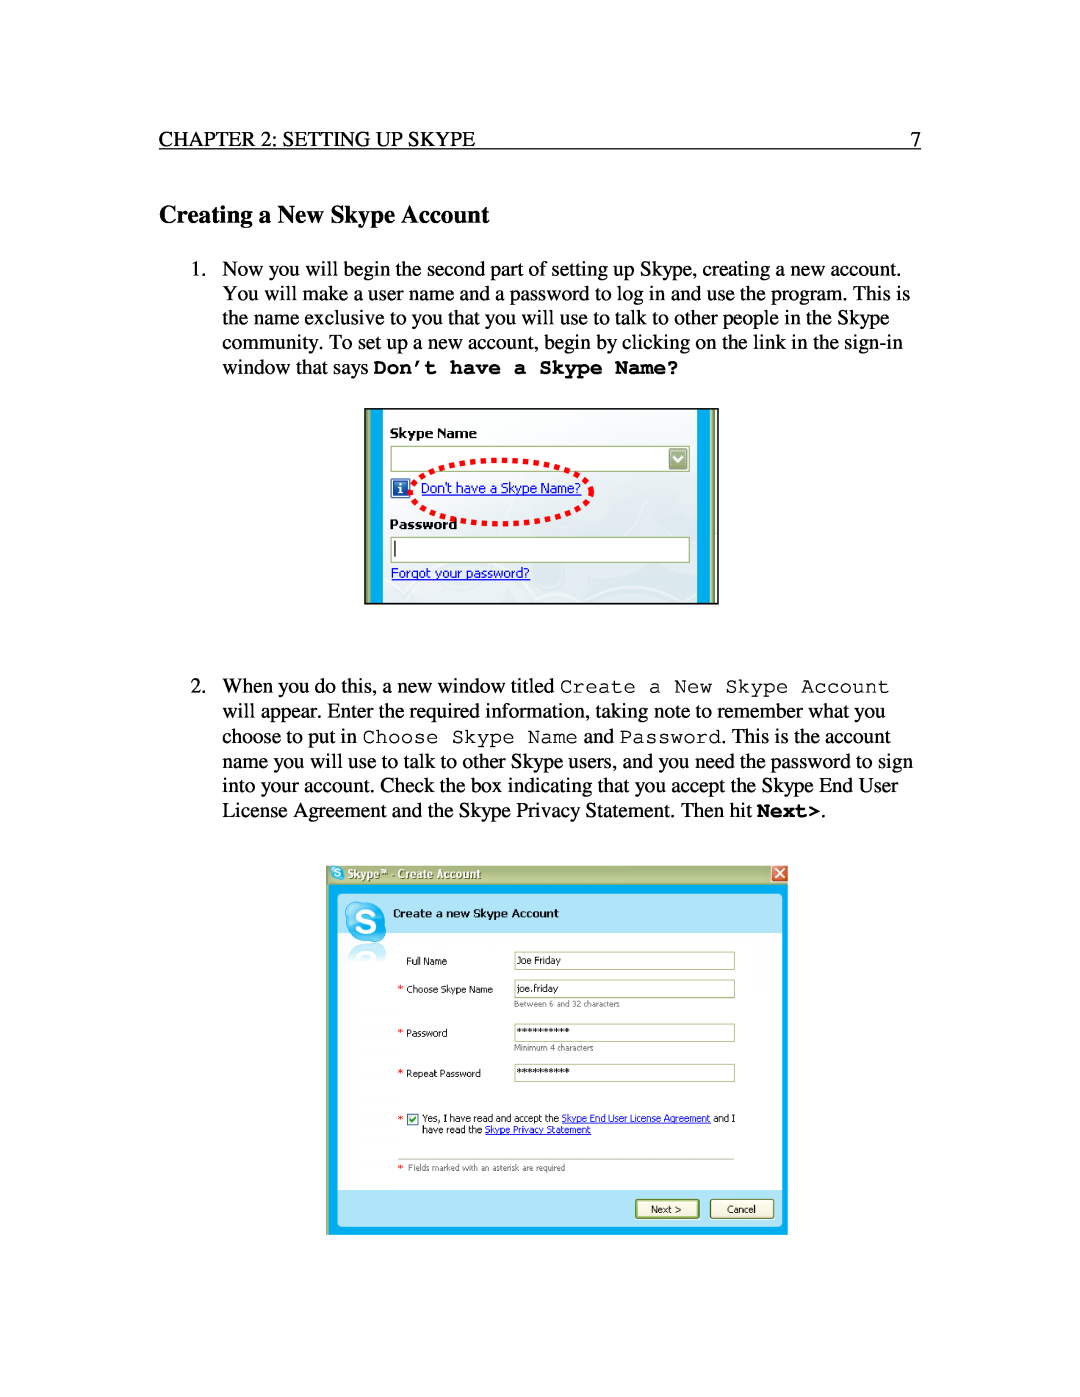 Nexotek NT-B300 manual CreatingaNewSkypeAccount, Settingupskype 